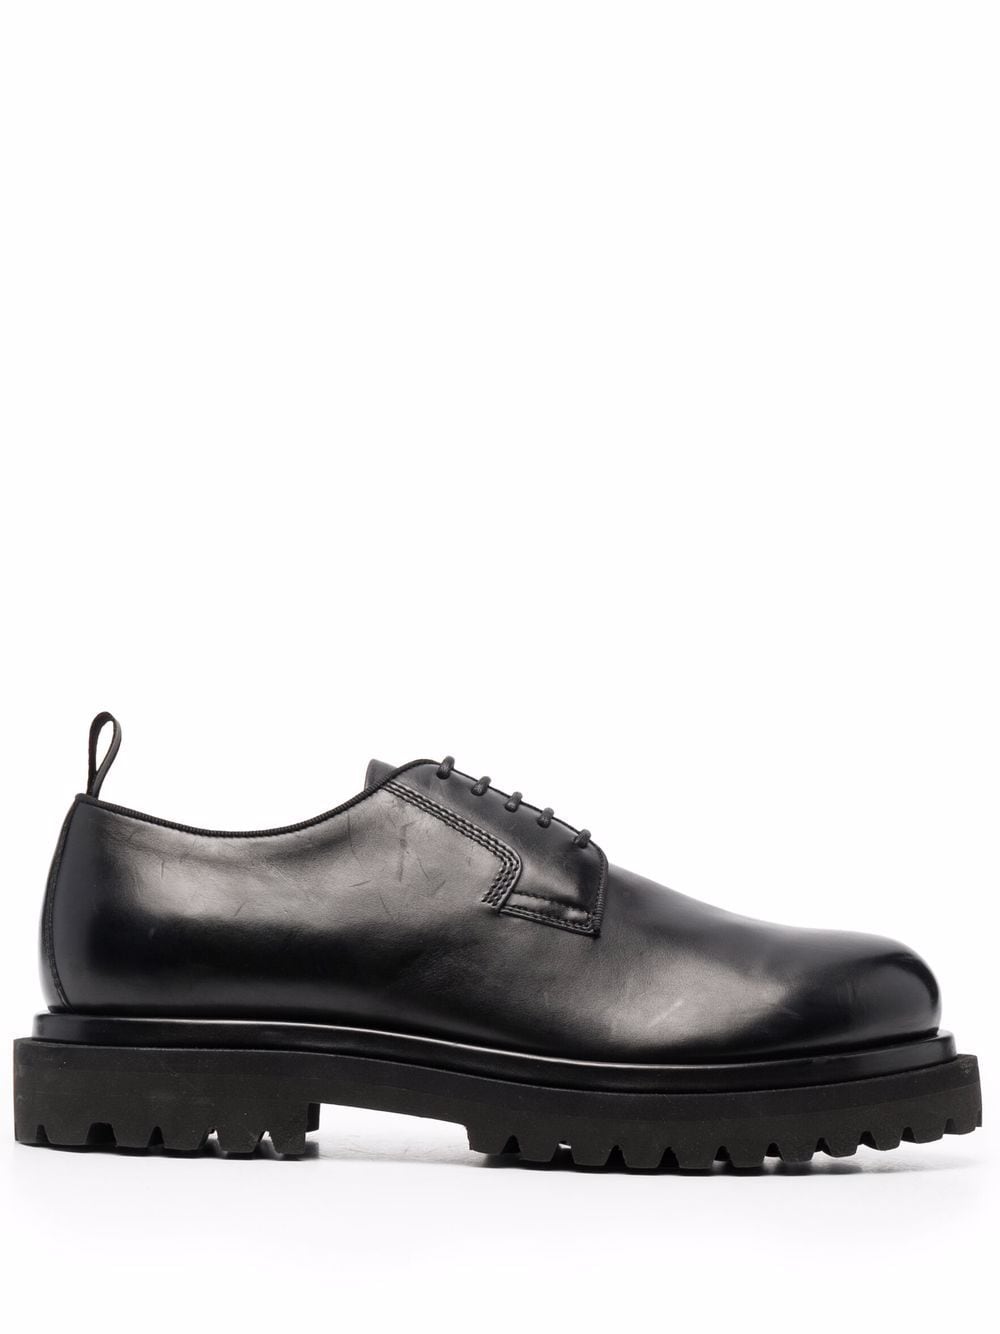 Officine Creative polished leather derby shoes - Black von Officine Creative